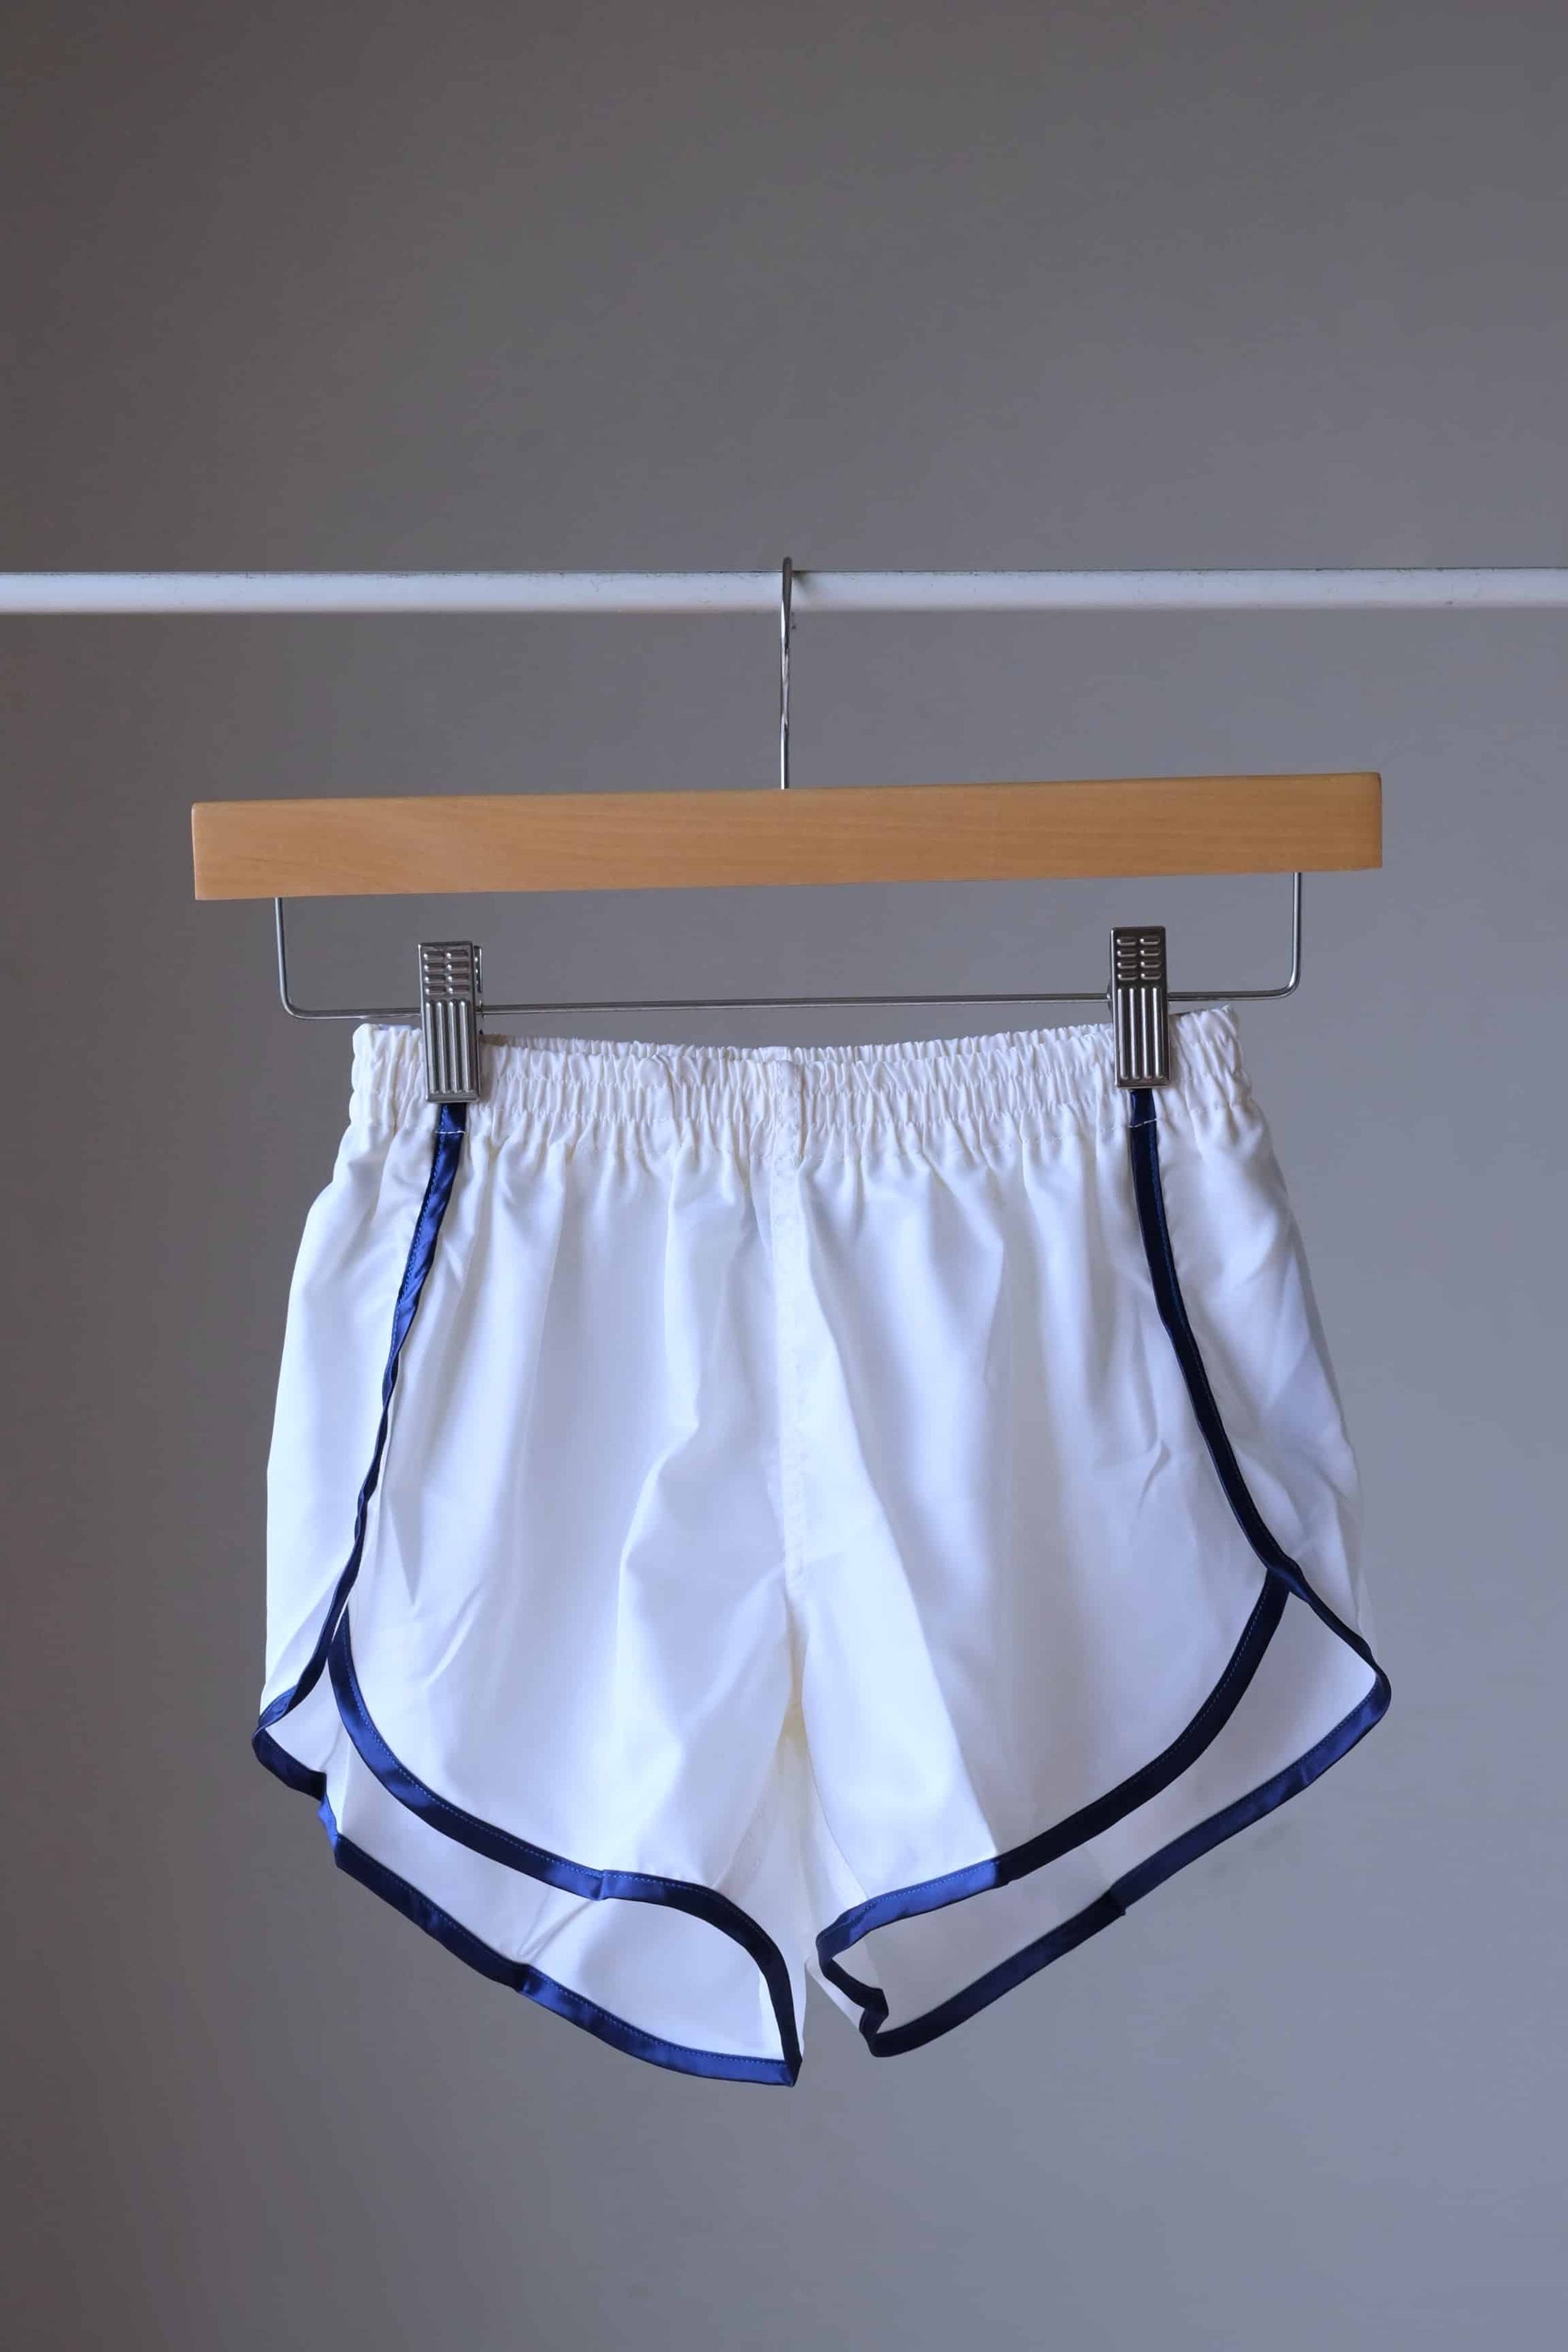 Vintage Satin 80's Jogging Shorts white navy blue